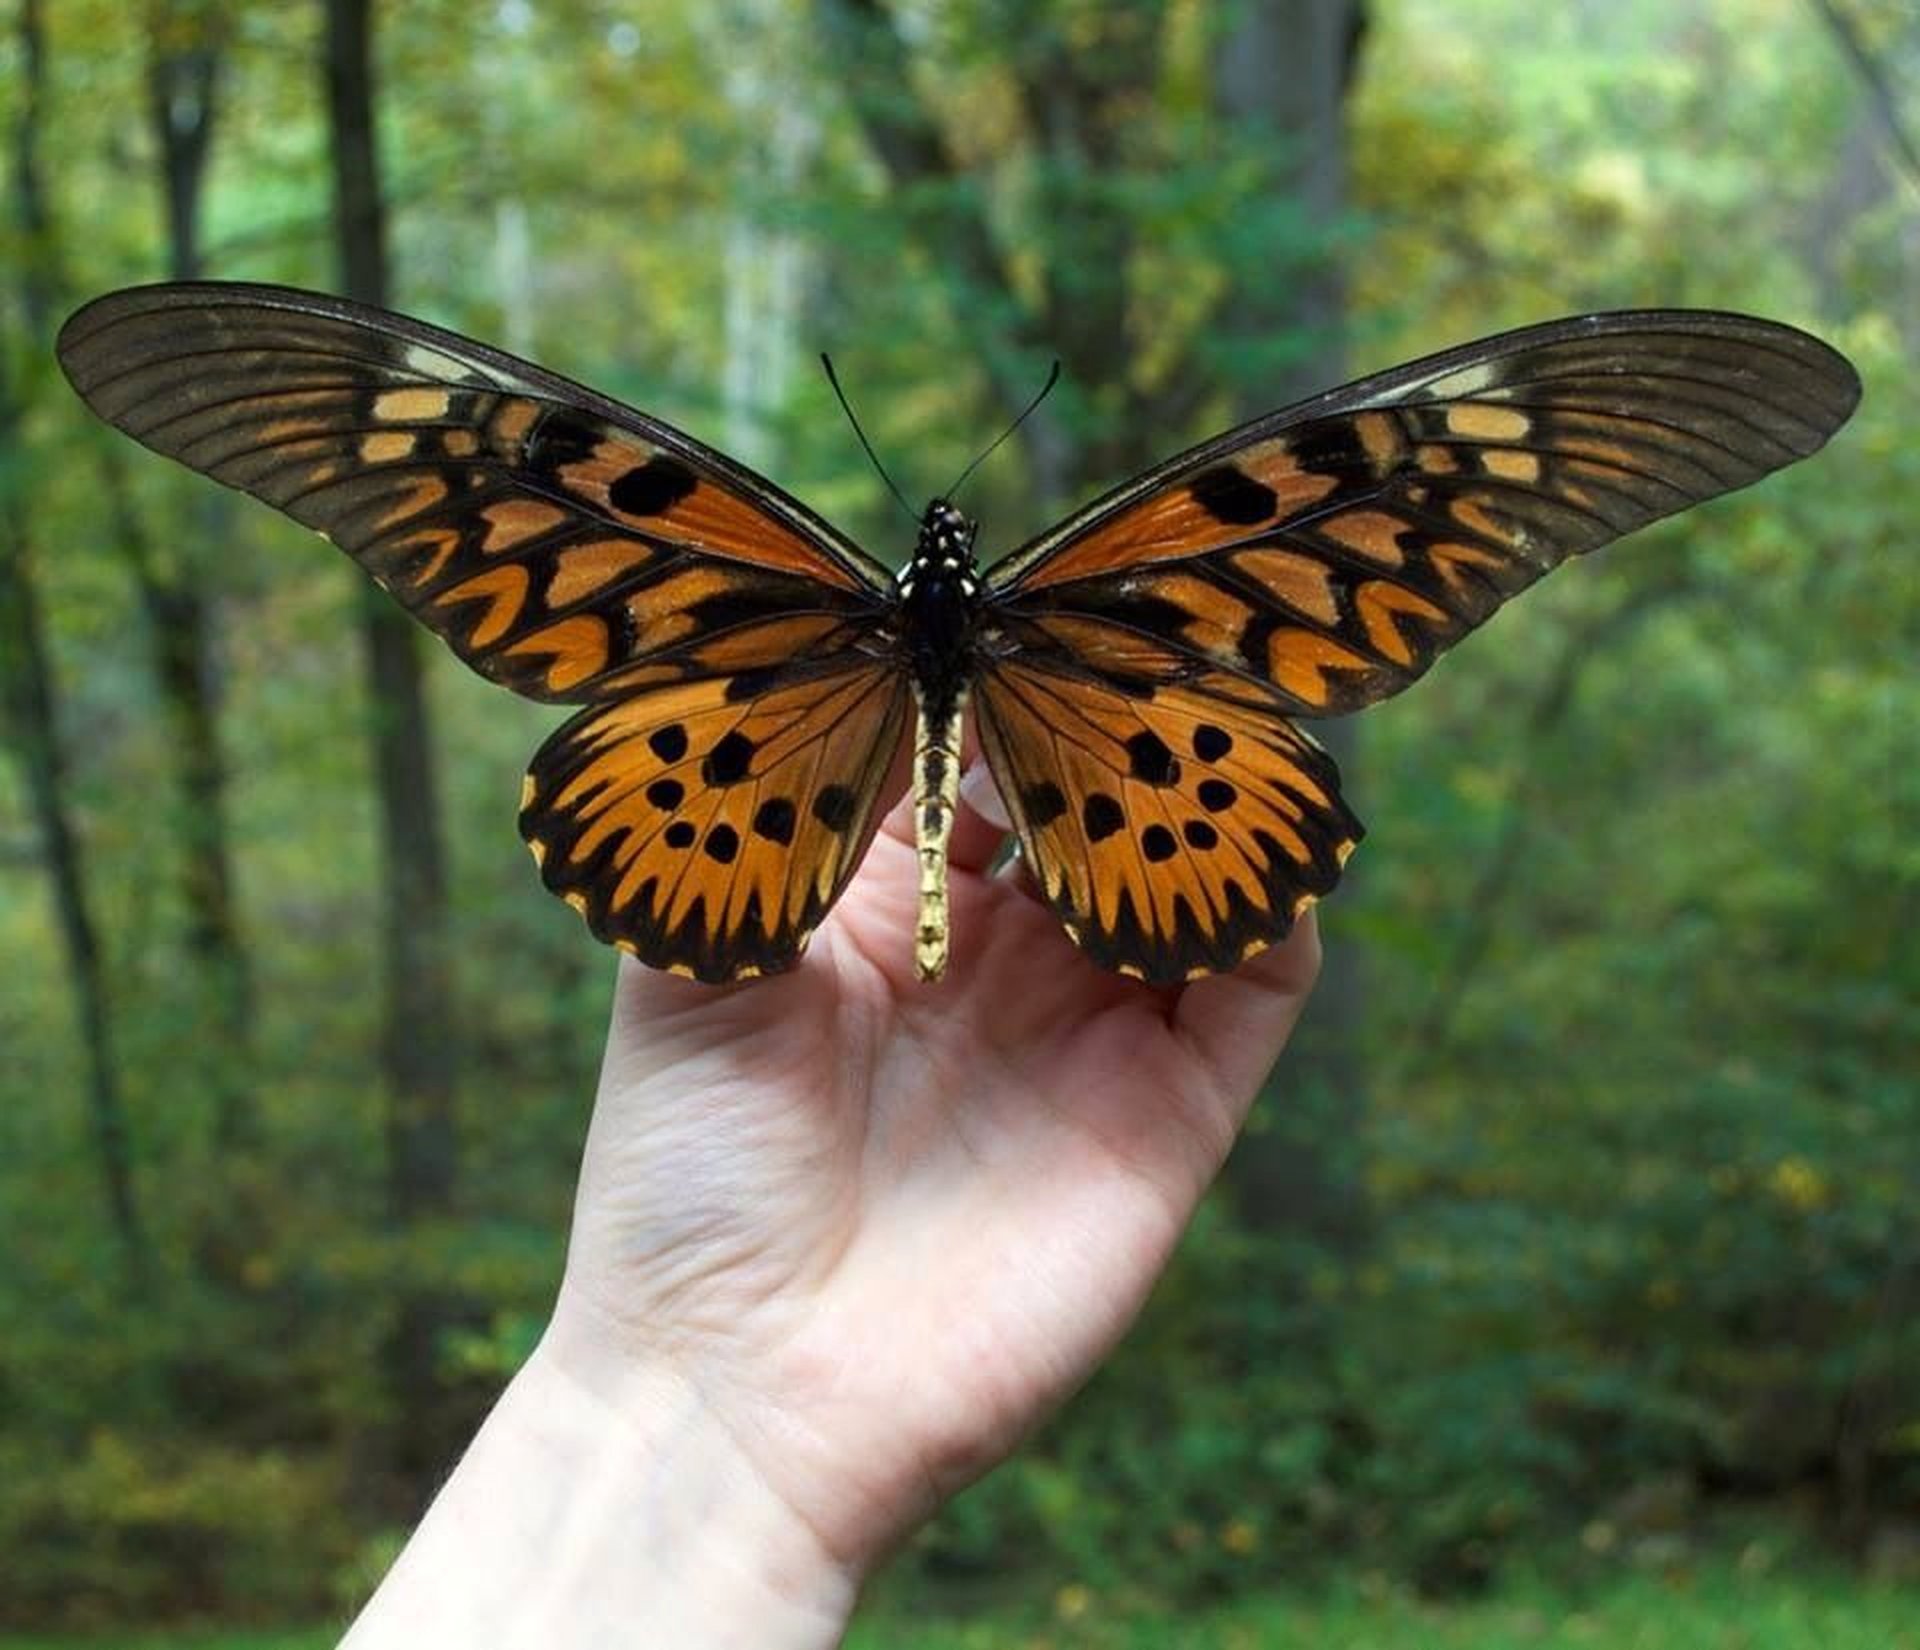 Огромные бабочки порхали. Парусник Антимах бабочка. Папилио антимахус бабочка. Бабочка Урания Мадагаскарская. Парусник Антимах ядовитая бабочка.